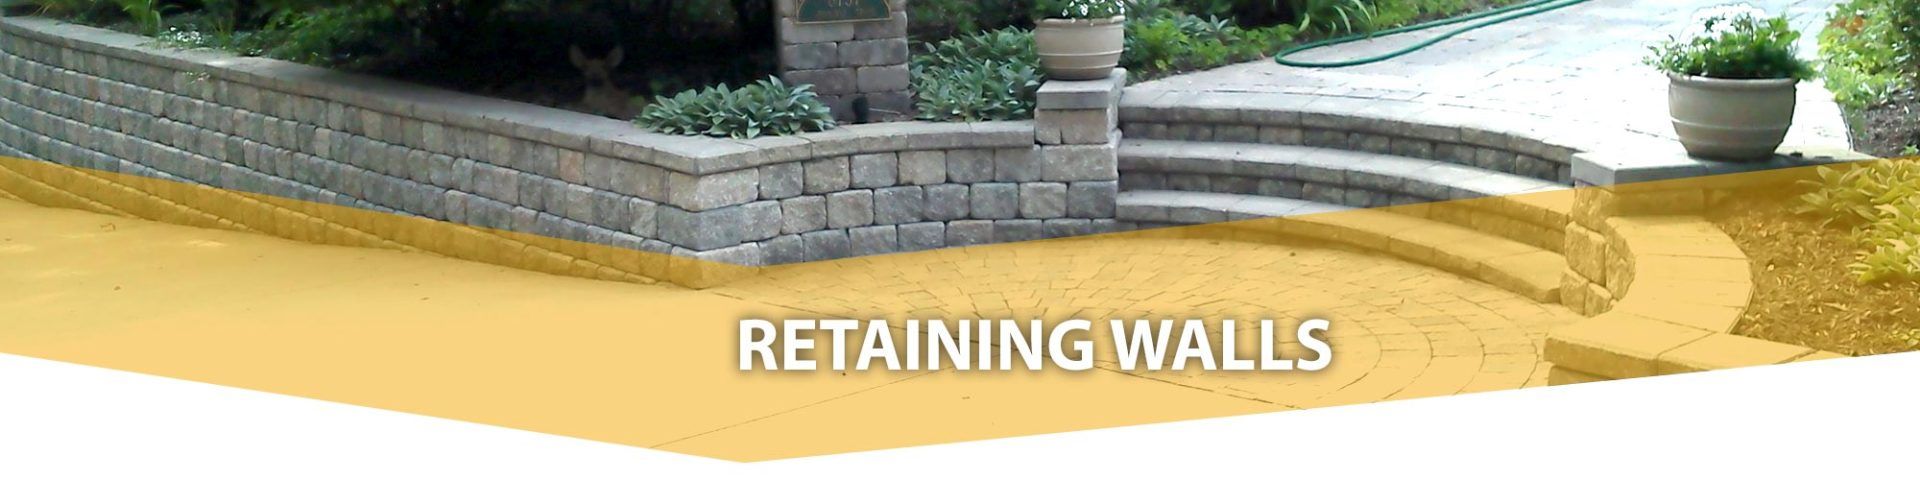 Retaining Wall Design - Bloomington IL